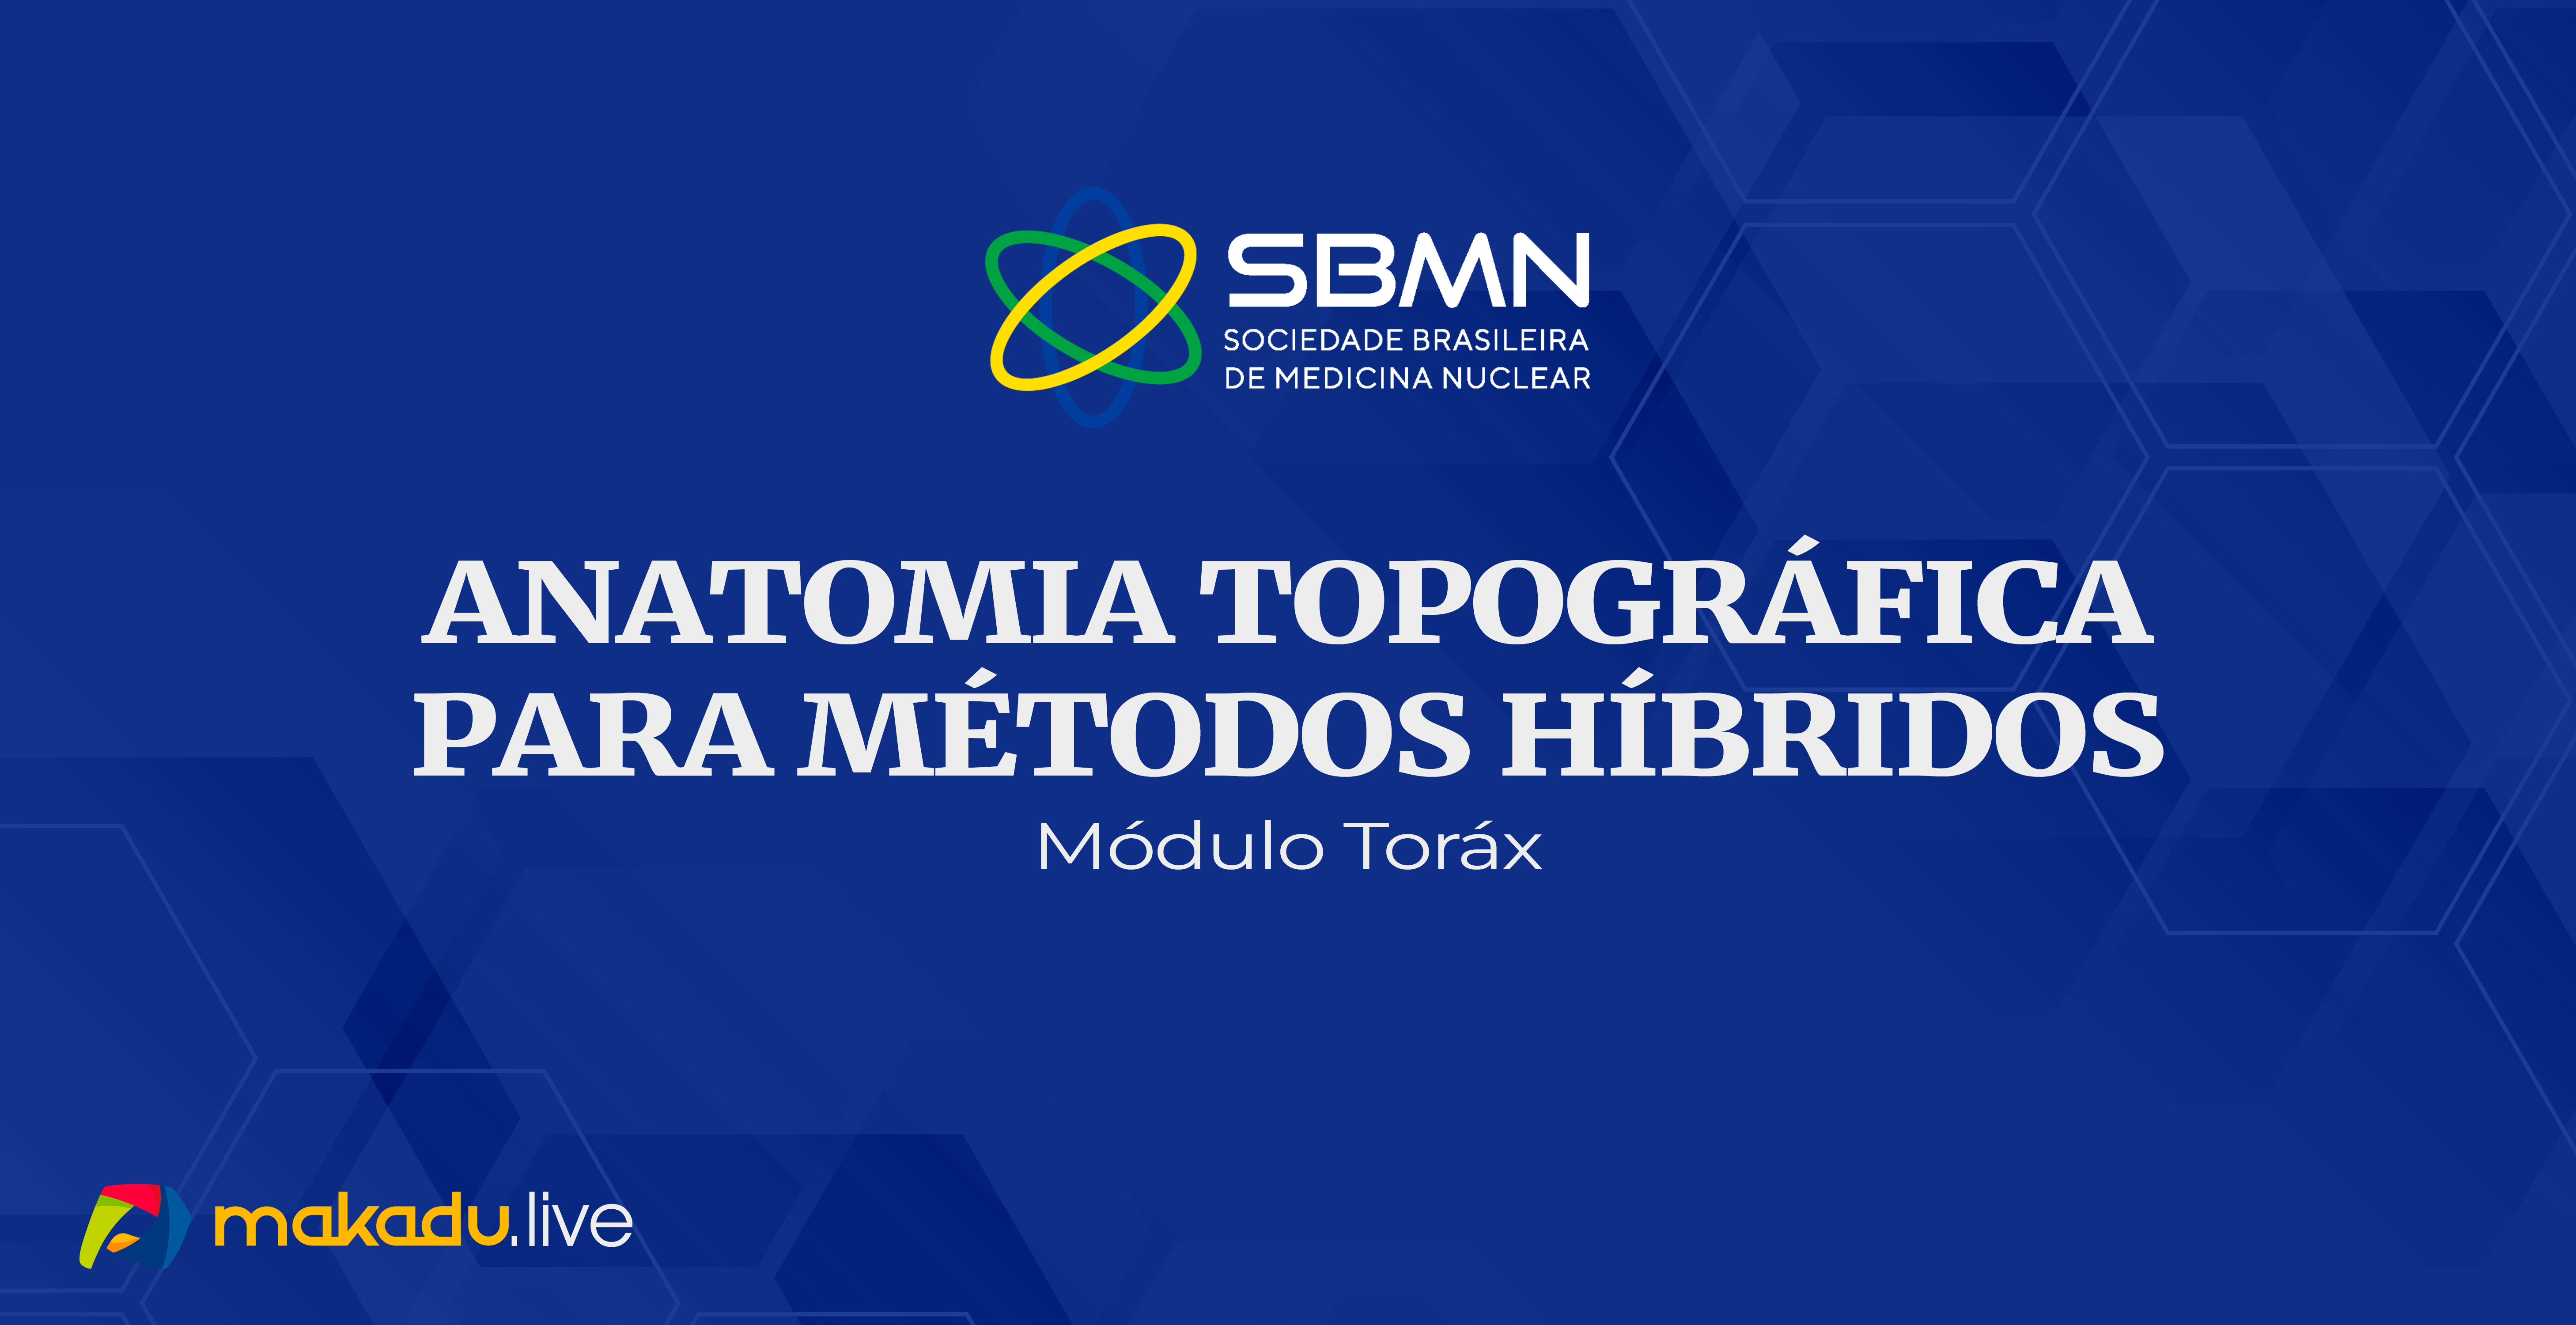 Curso De Anatomia Topográfica Para Métodos Híbridos – Módulo Toráx